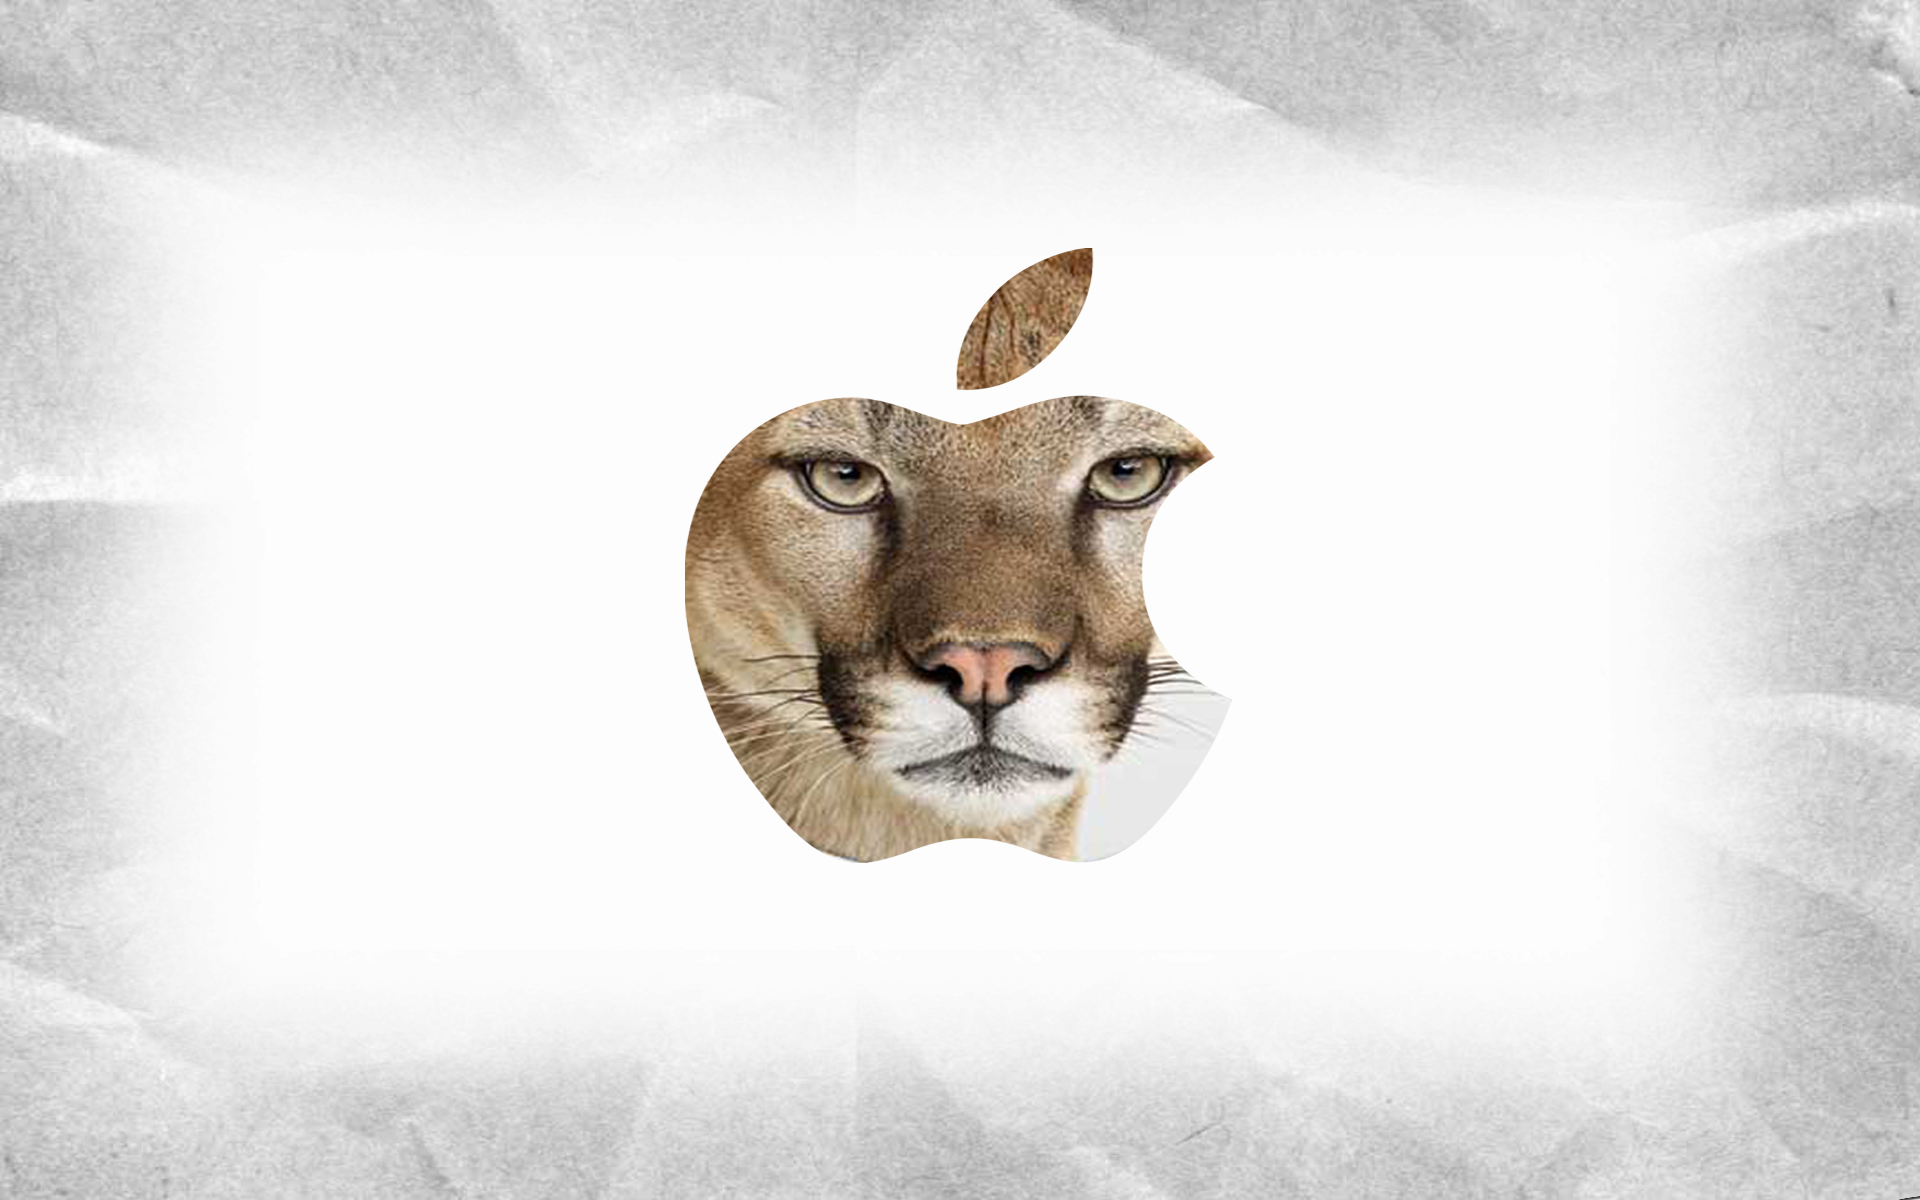 macbook pro os x lion wallpaper